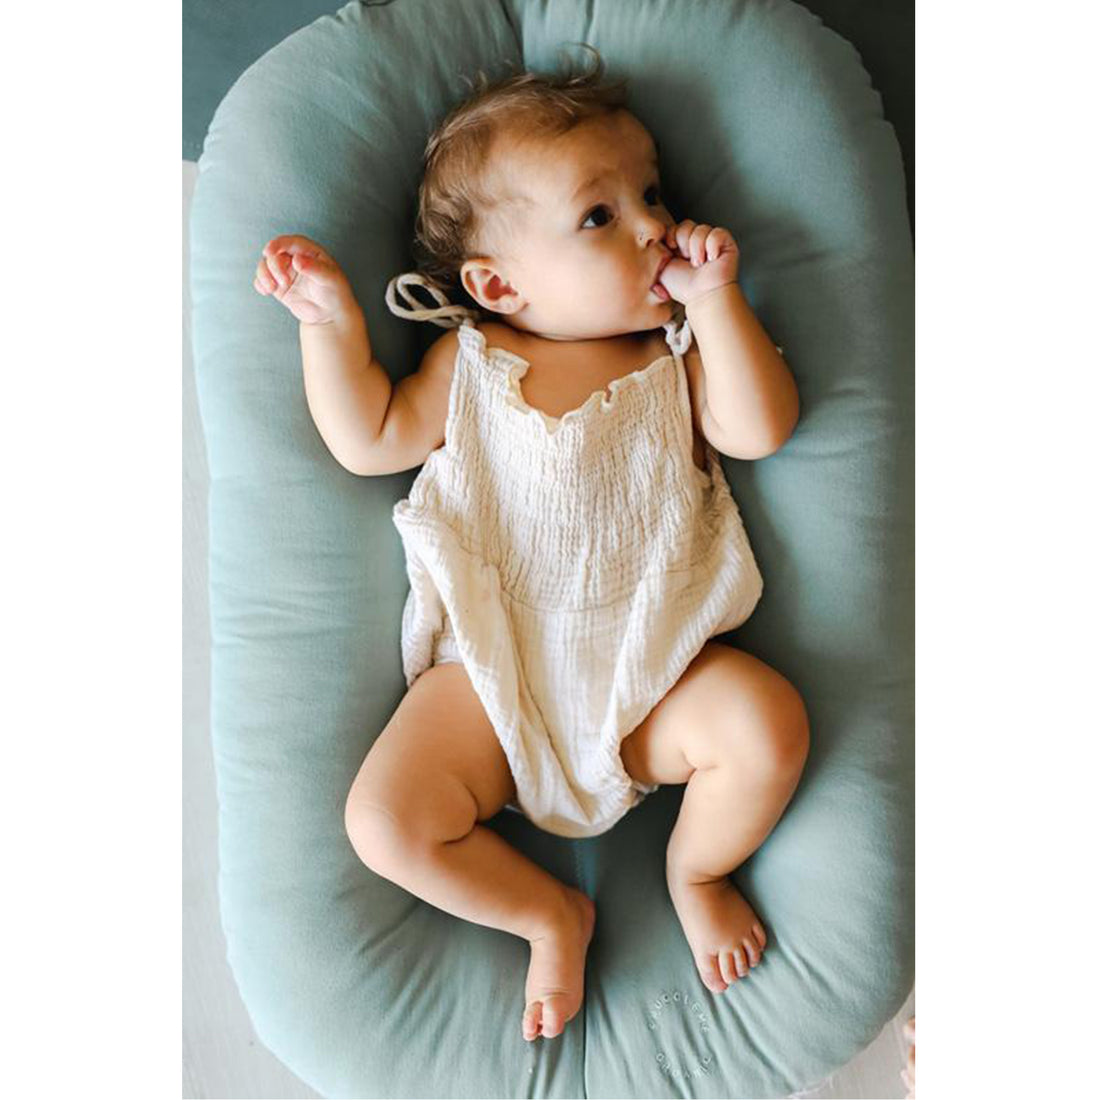 Infant Lounger Snuggle Nest Pillow Baby | CoalaHola